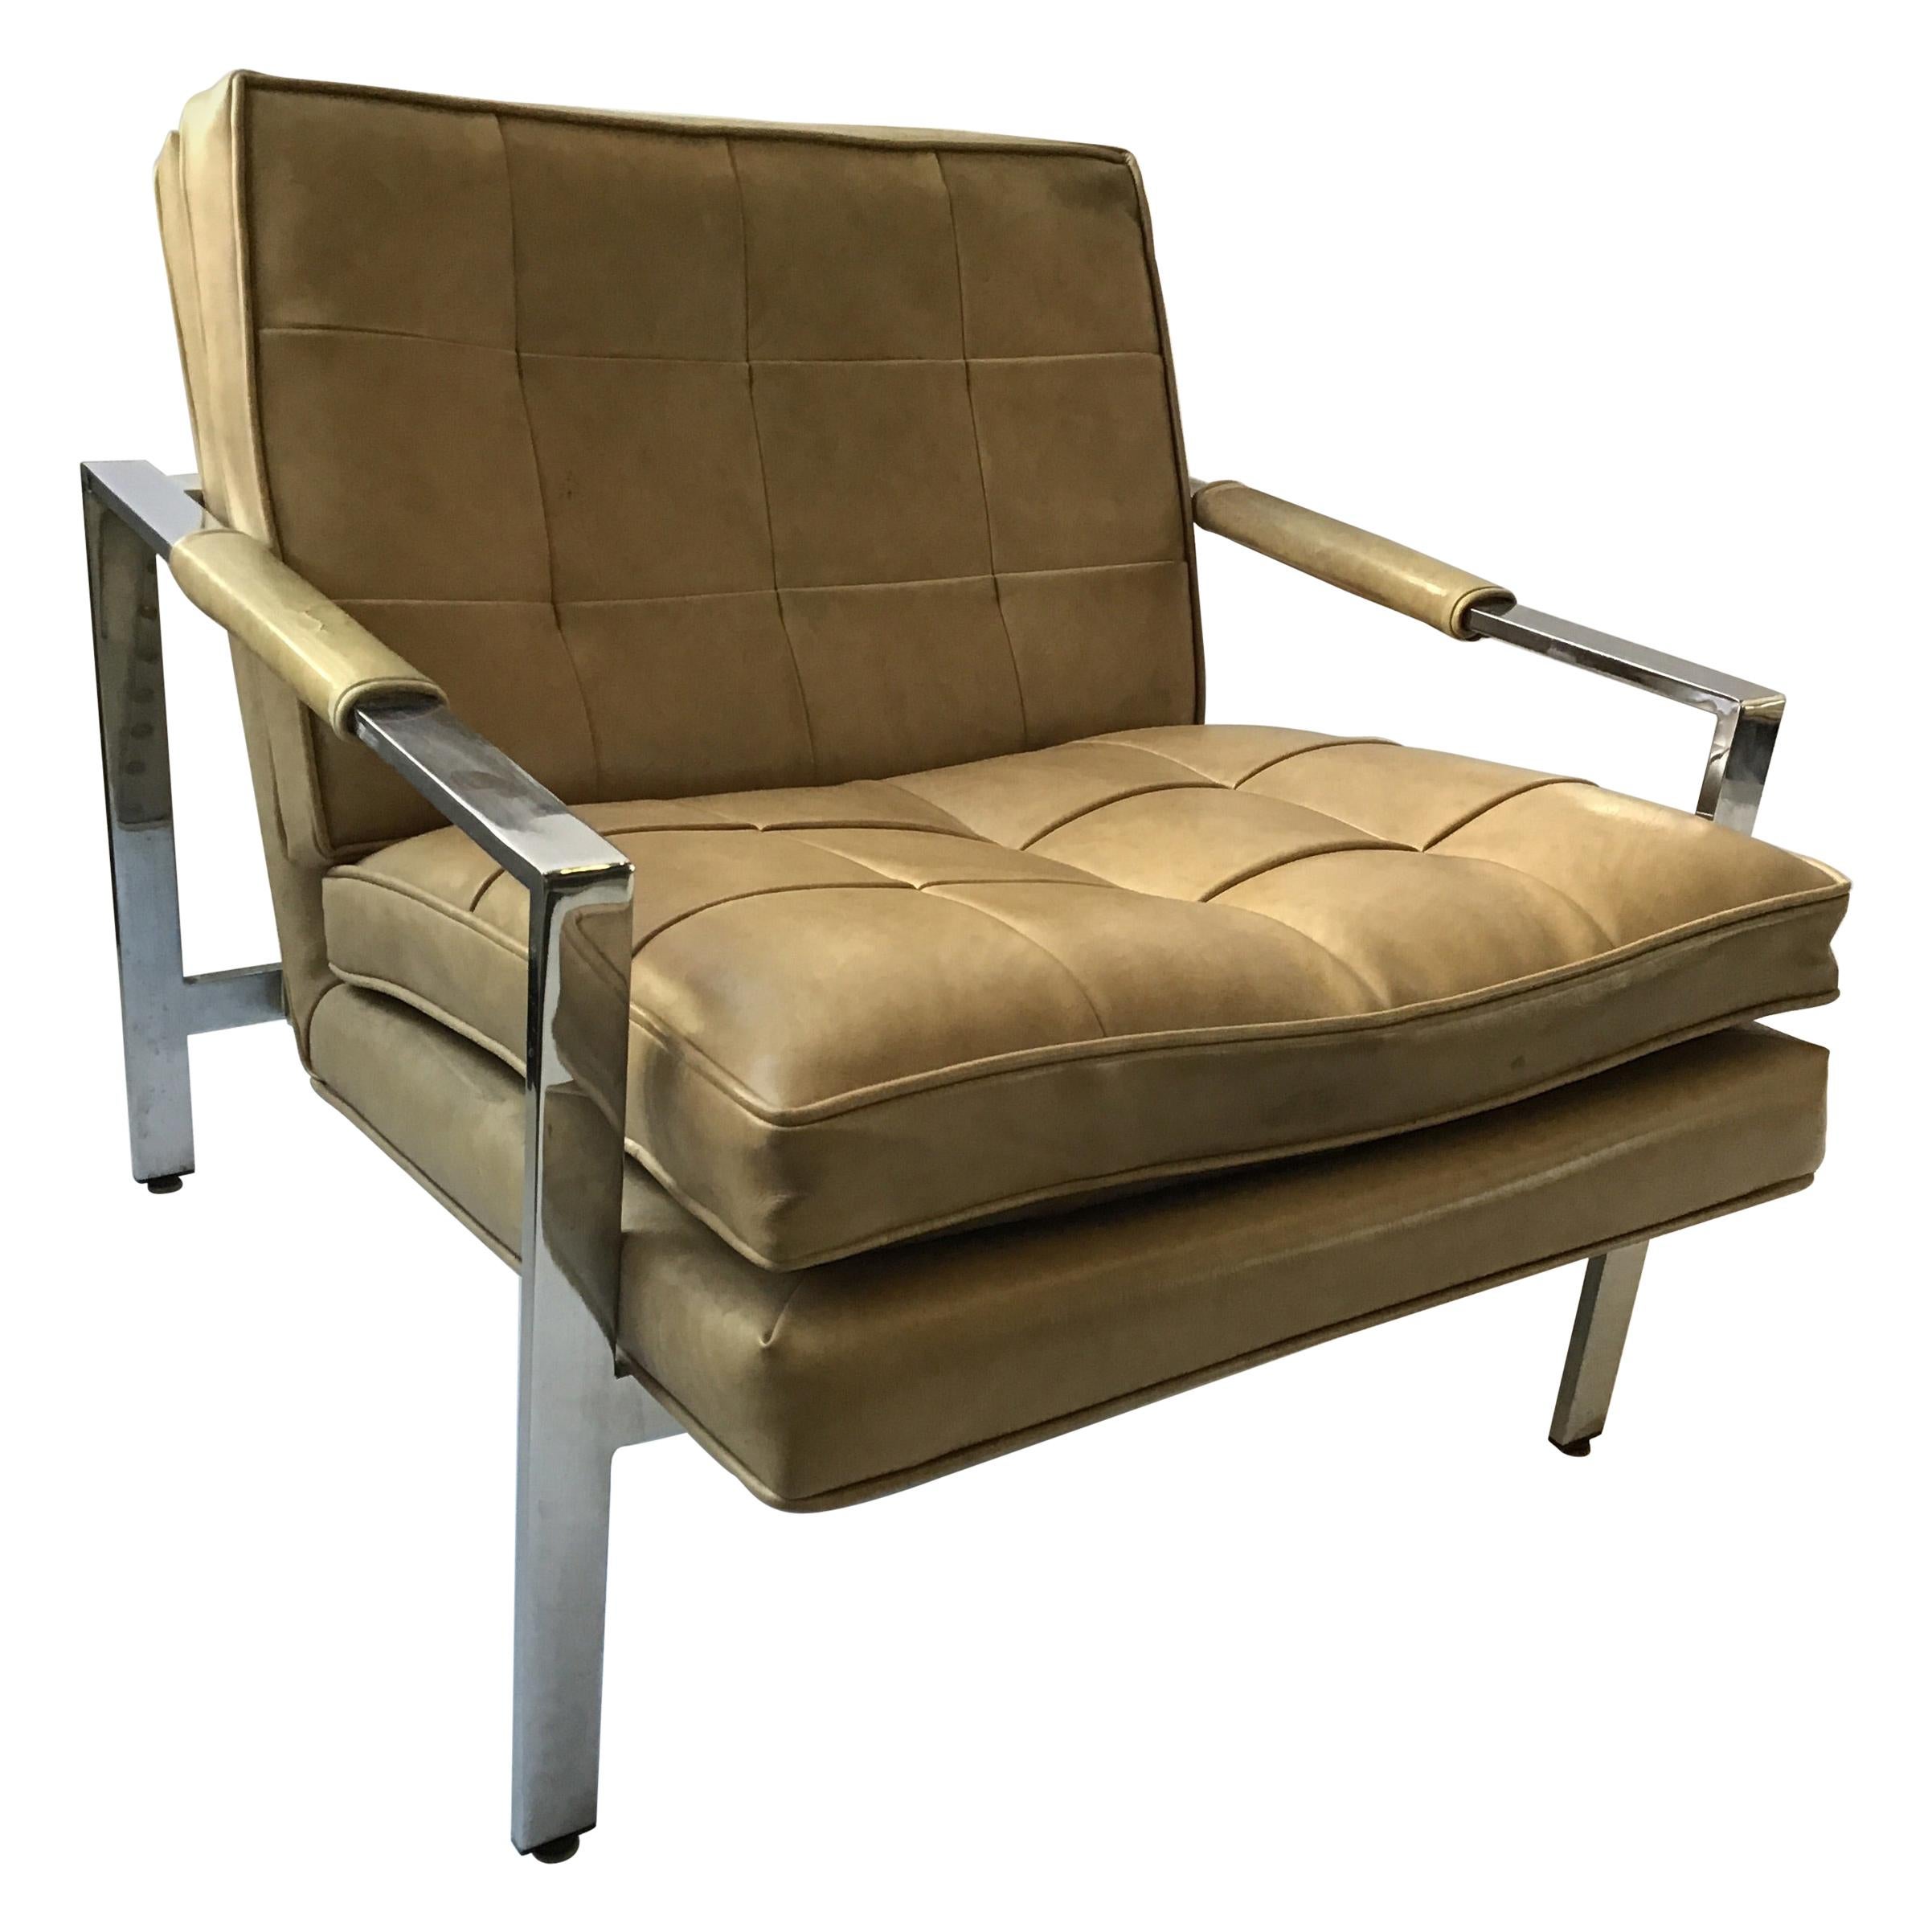 1970s Chrome Lounge Chair